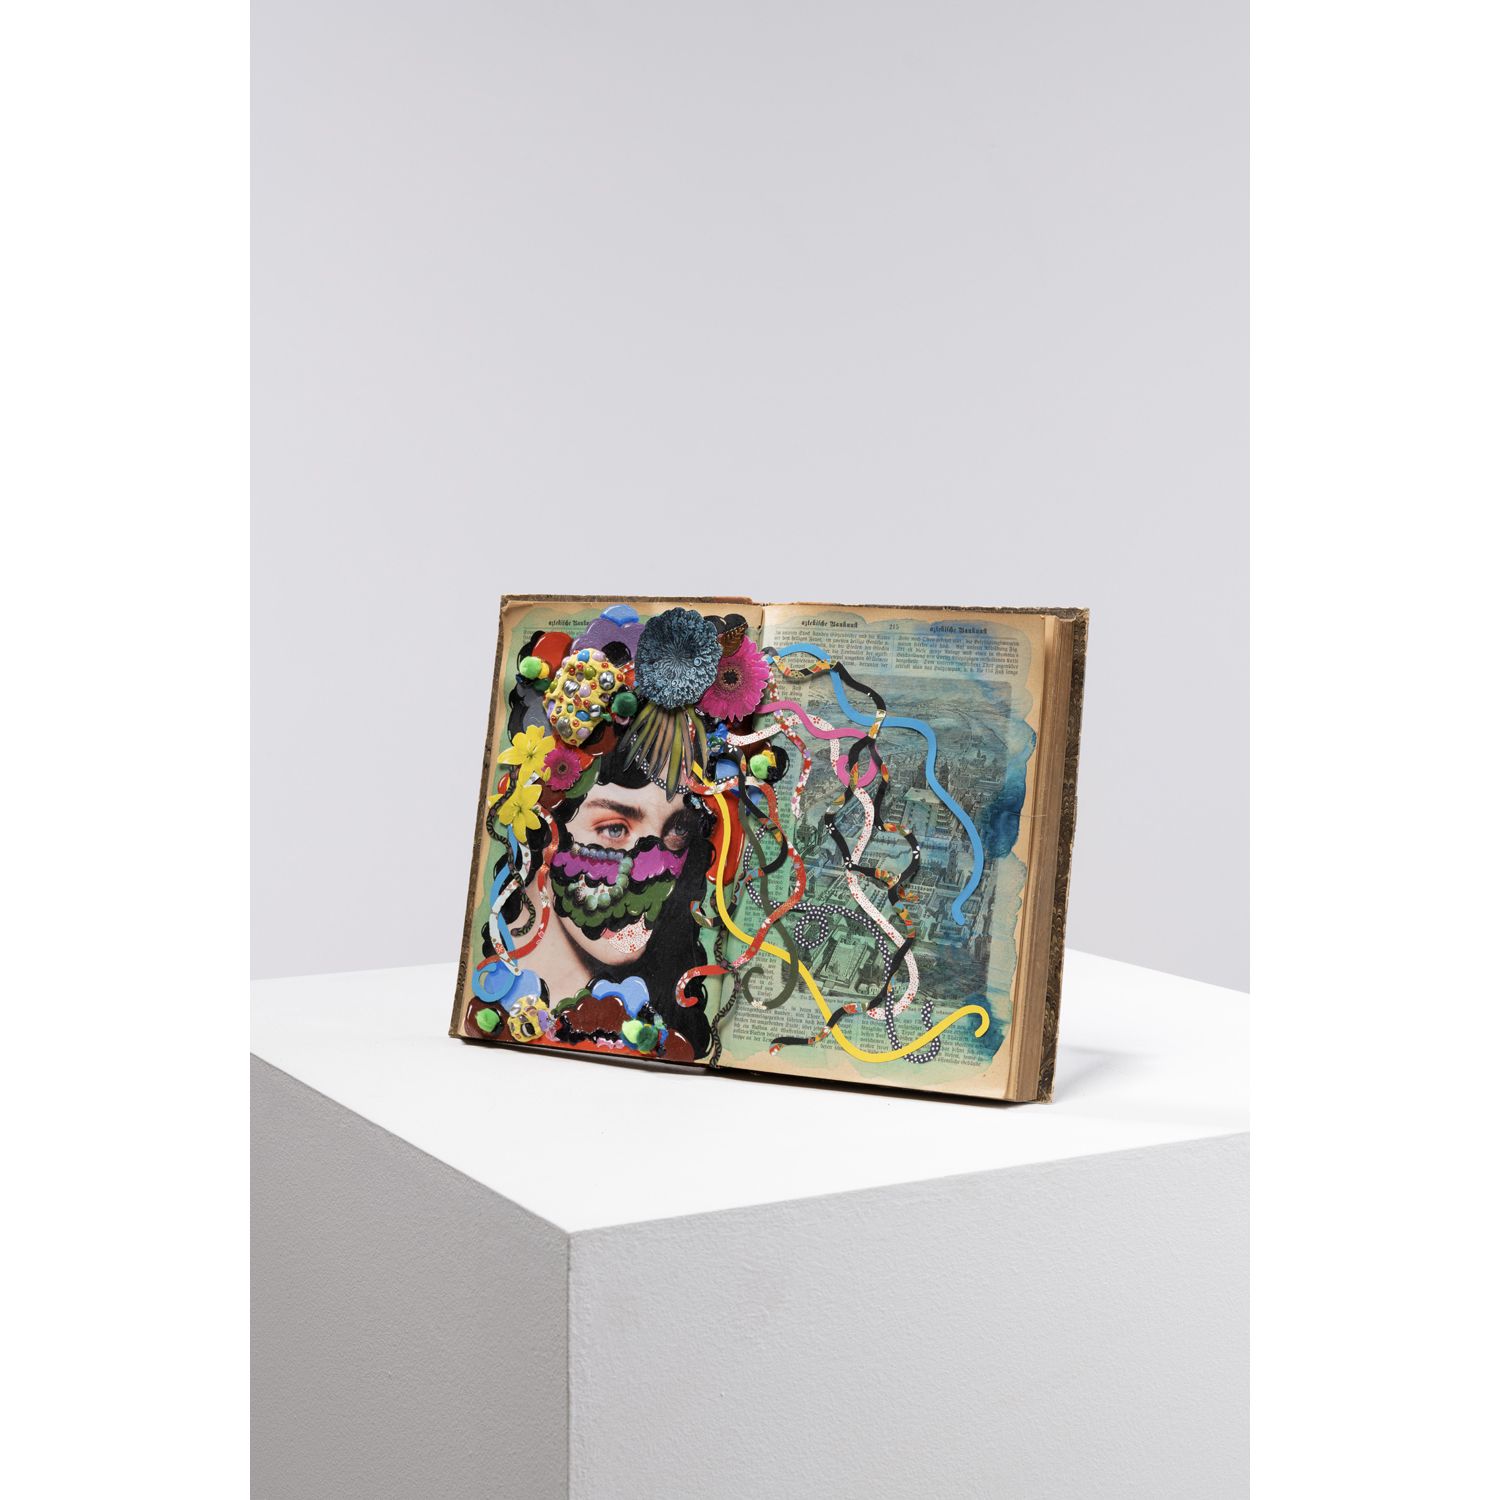 Null 艾丽西亚-帕斯（生于1967年

无题，（书画系列

旧书上的水粉画和拼贴画

独特的作品

25,5 x 35,5 x 3,5 cm

出处：- D&hellip;